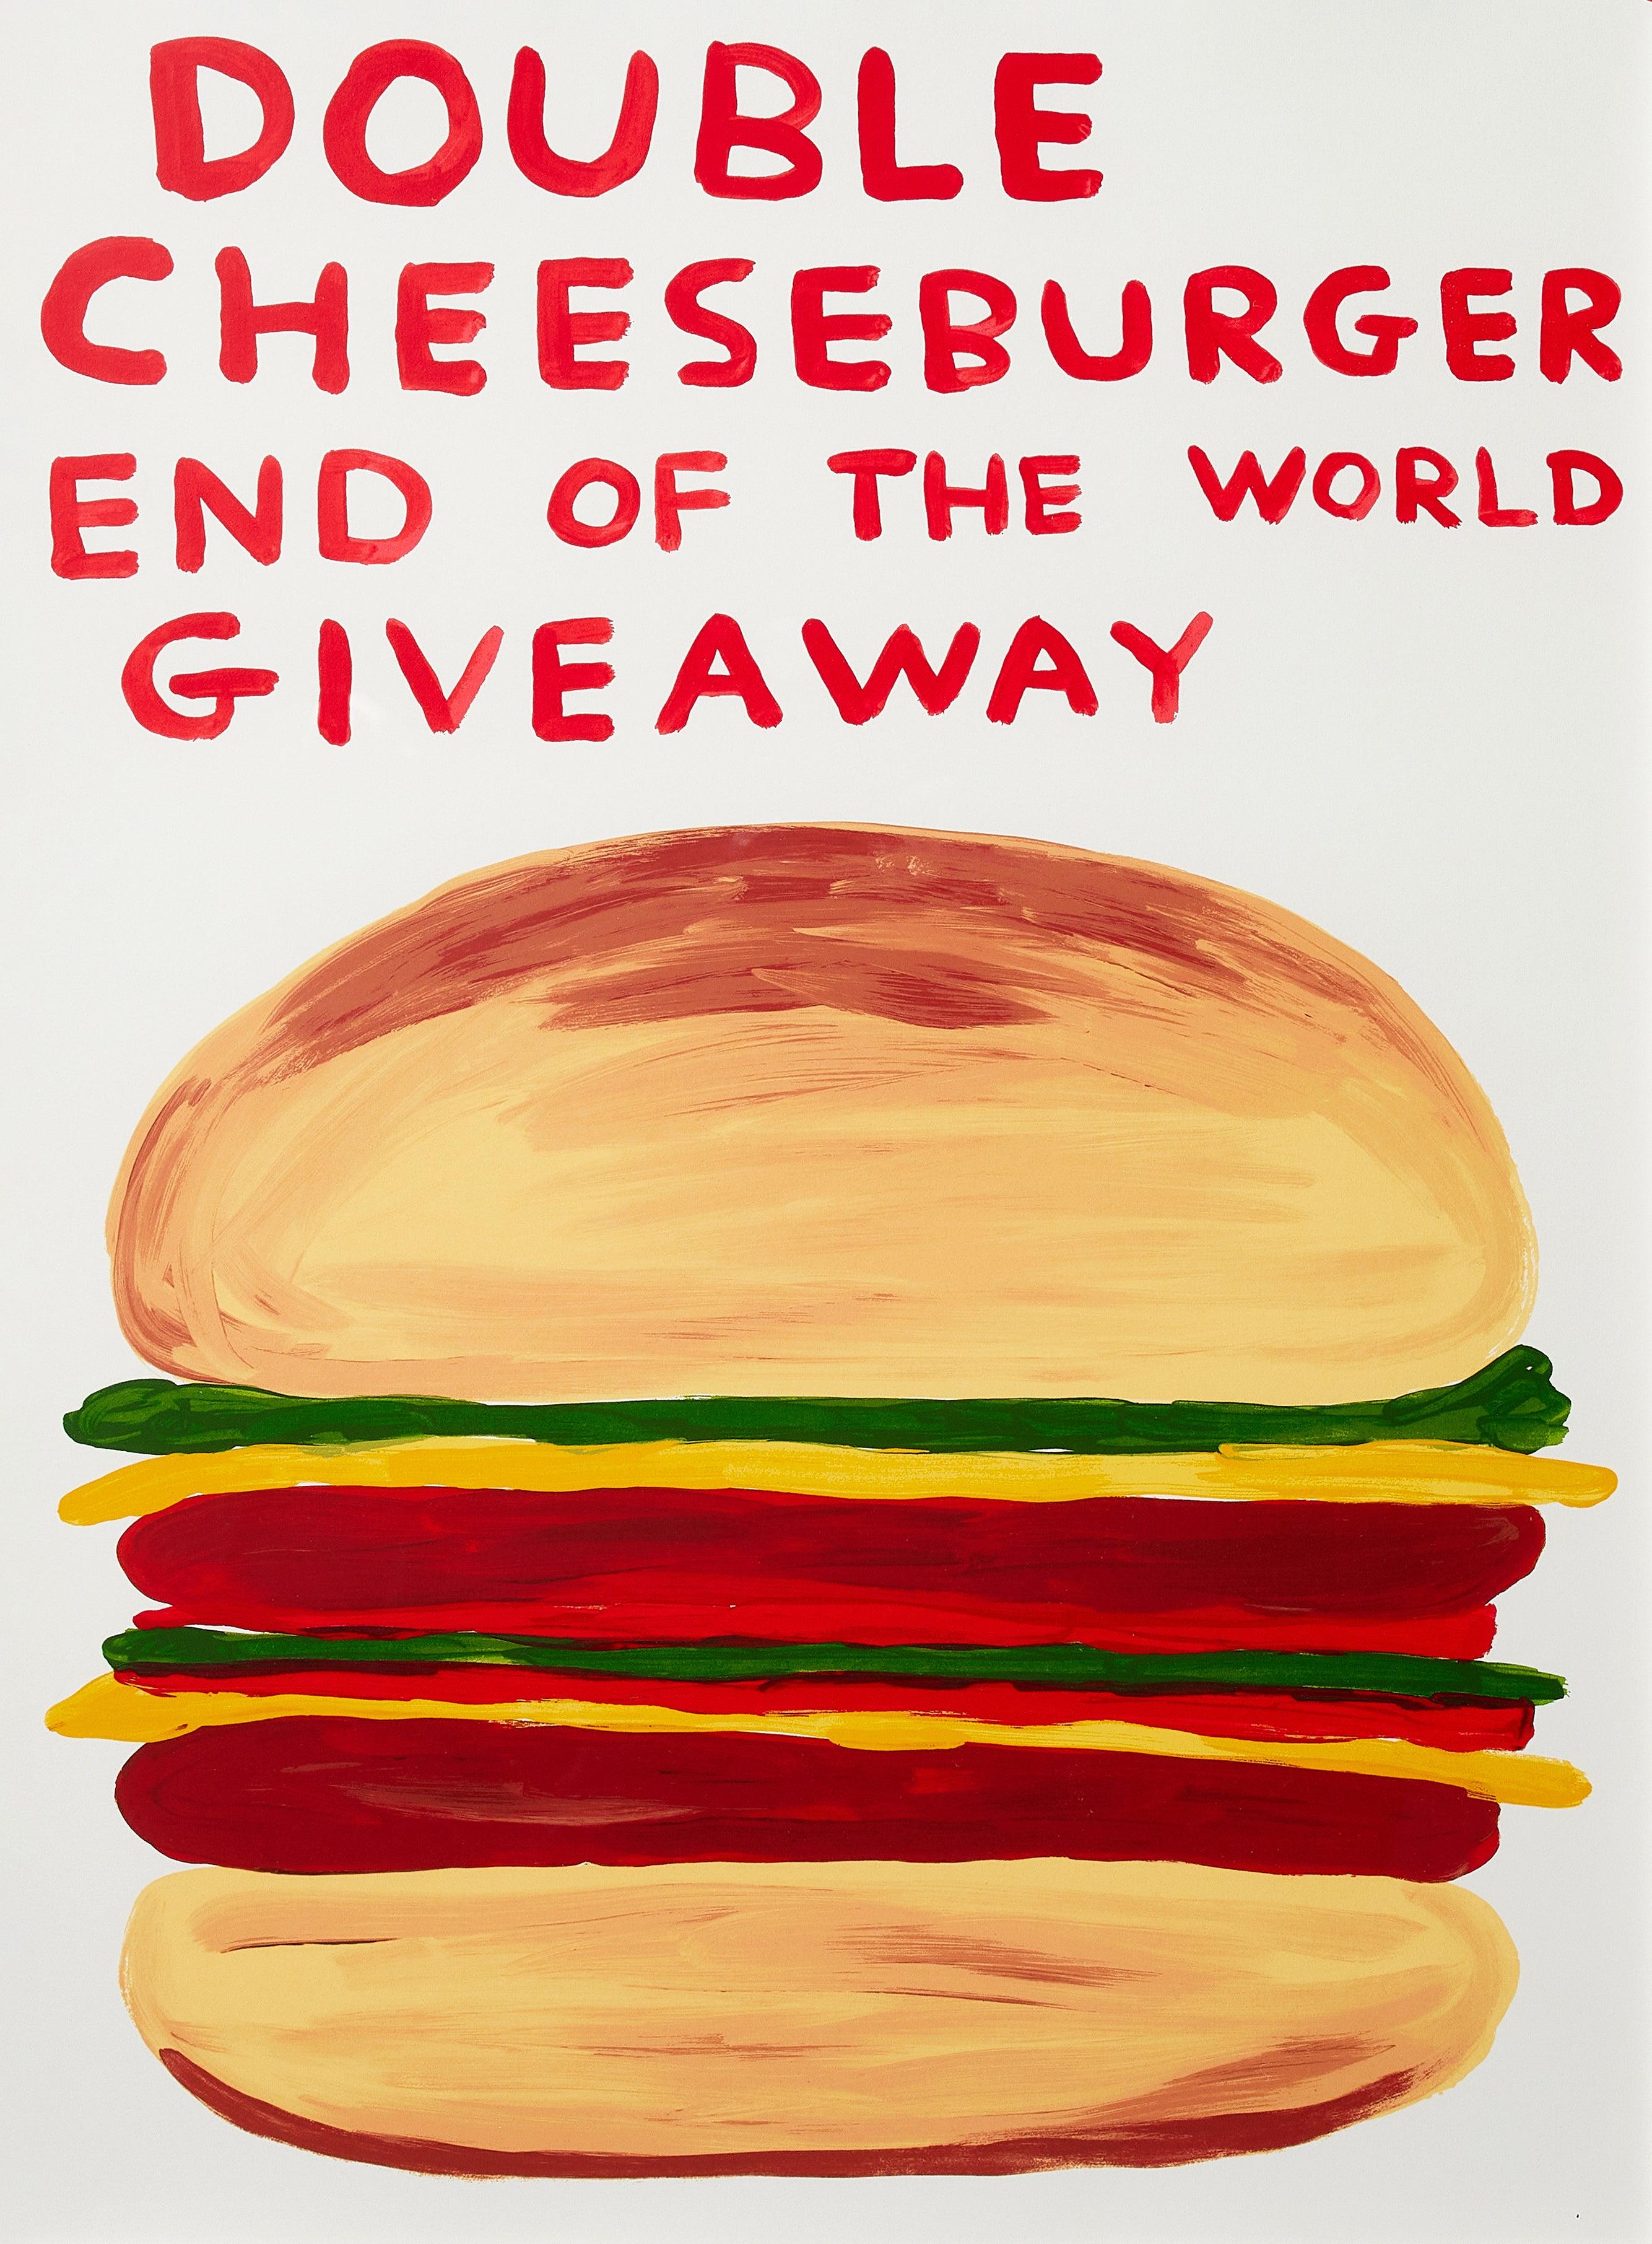 Print David Shrigley - Double Cheeseburger End of the World Giveaway - Écran imprimé, alimentation, par Shrigley